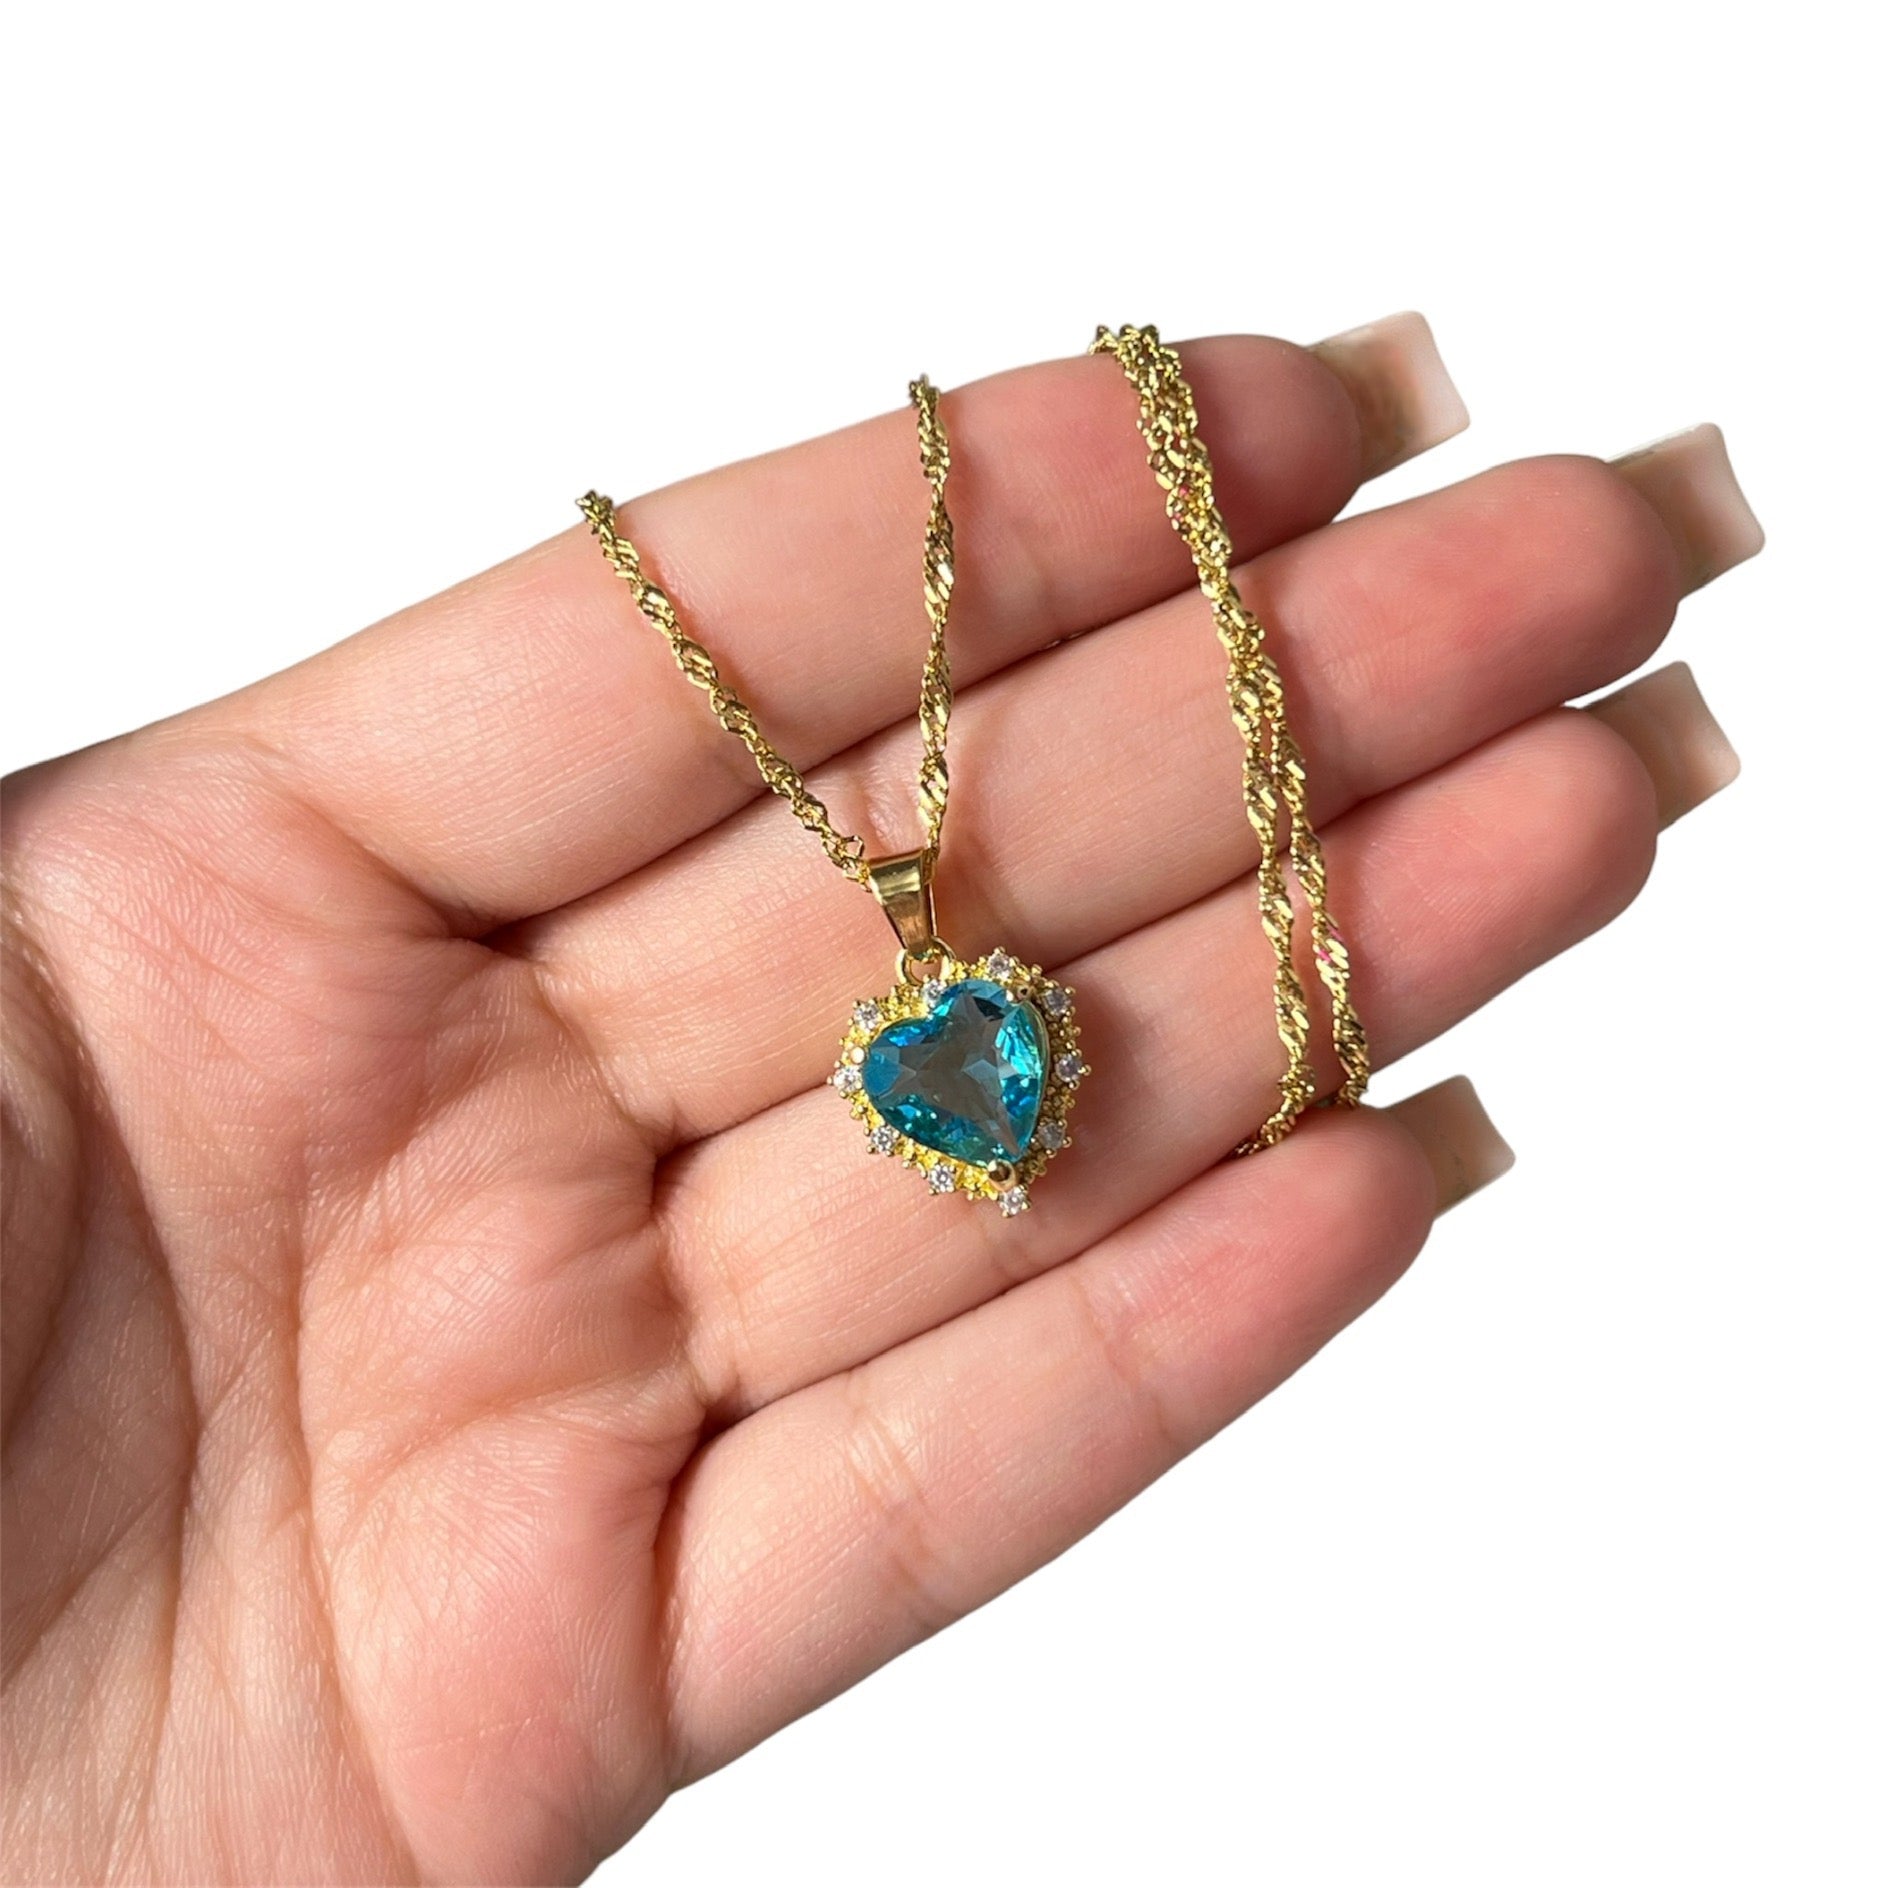 Tiffany Blue Necklace